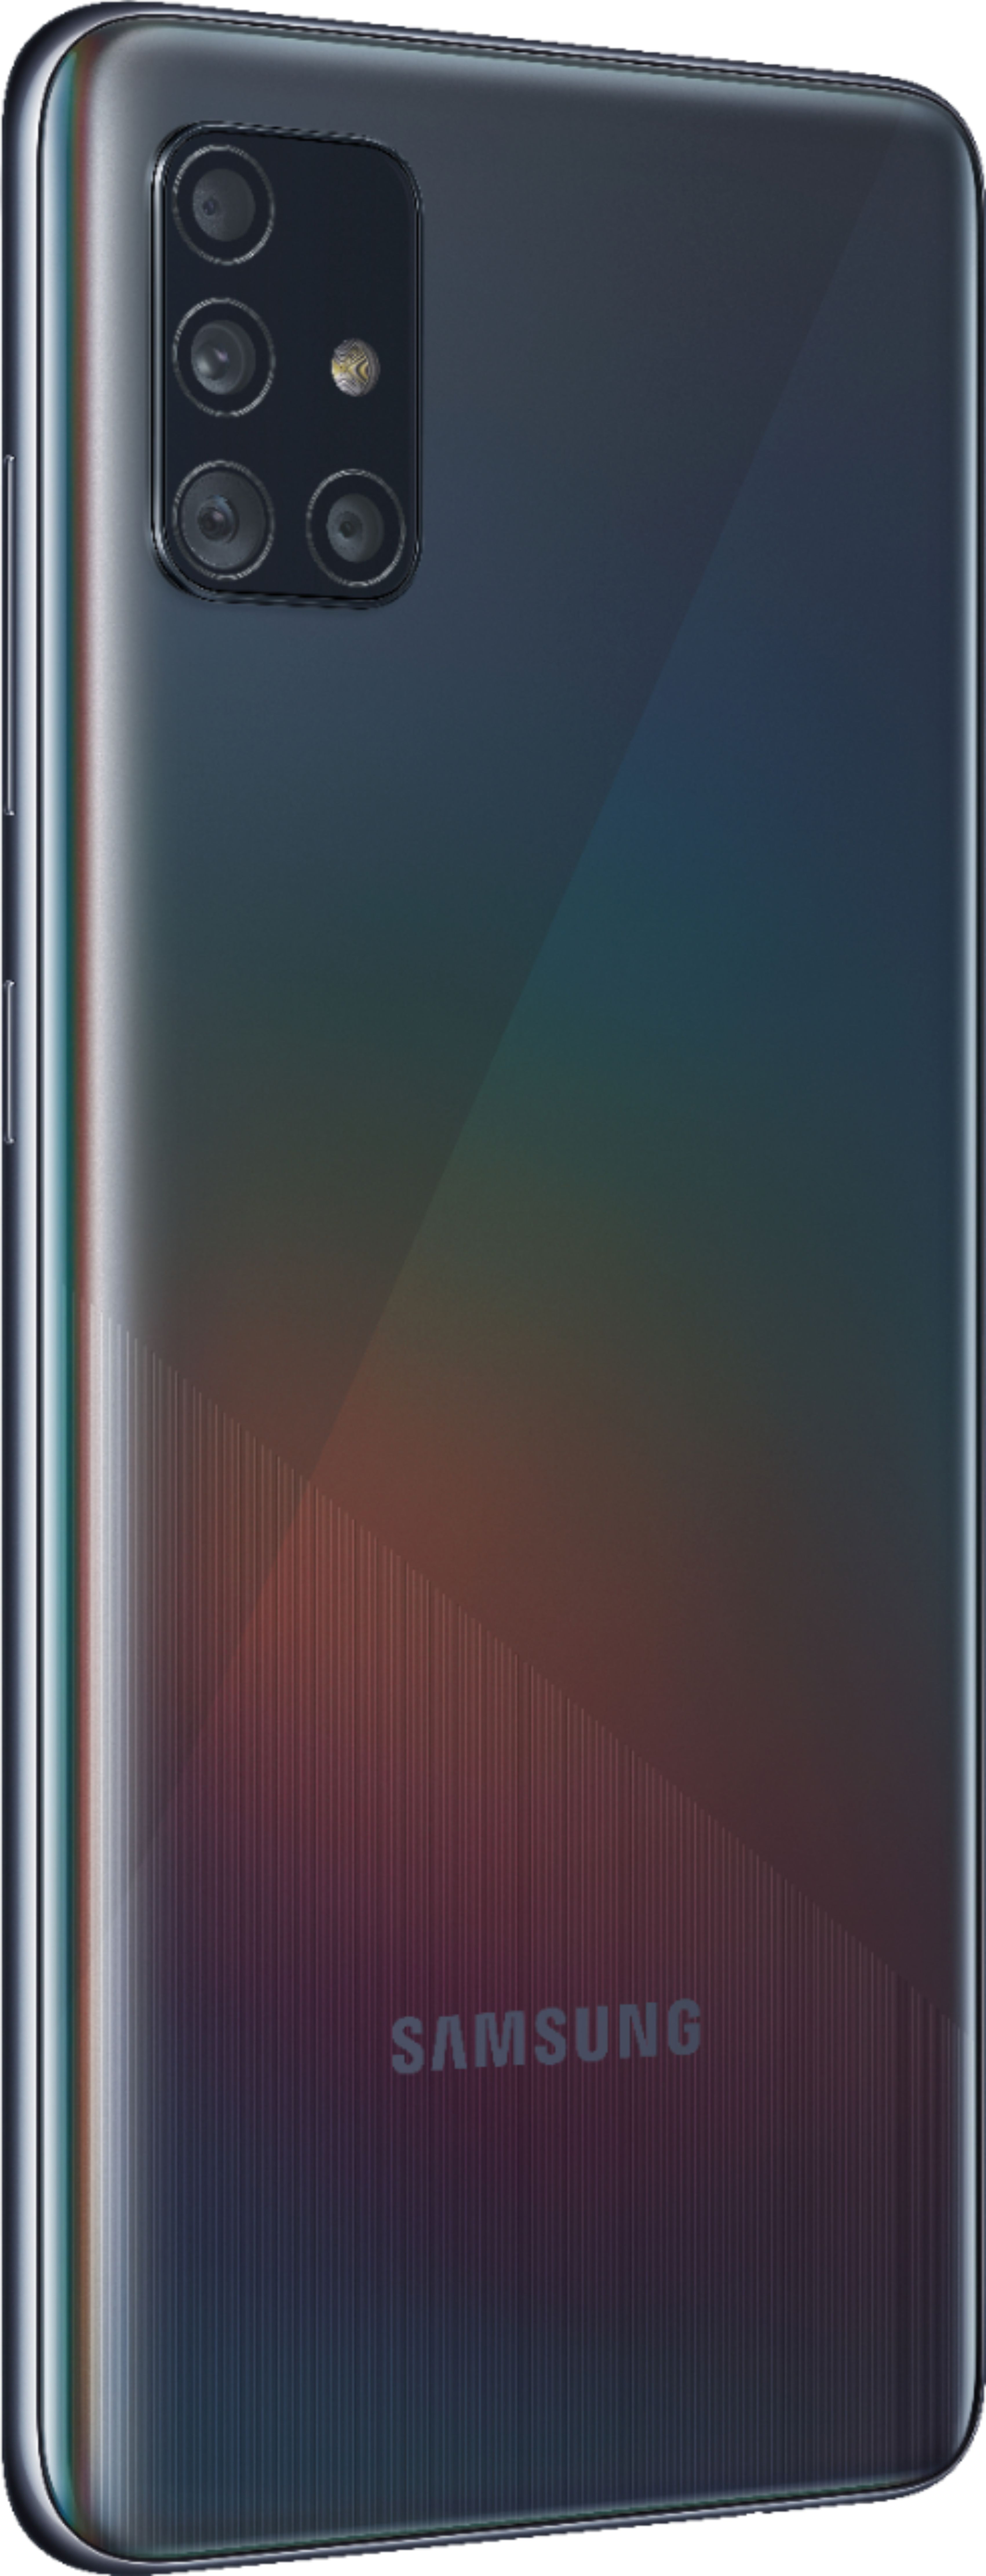 Explore Galaxy A51 128GB - Pink